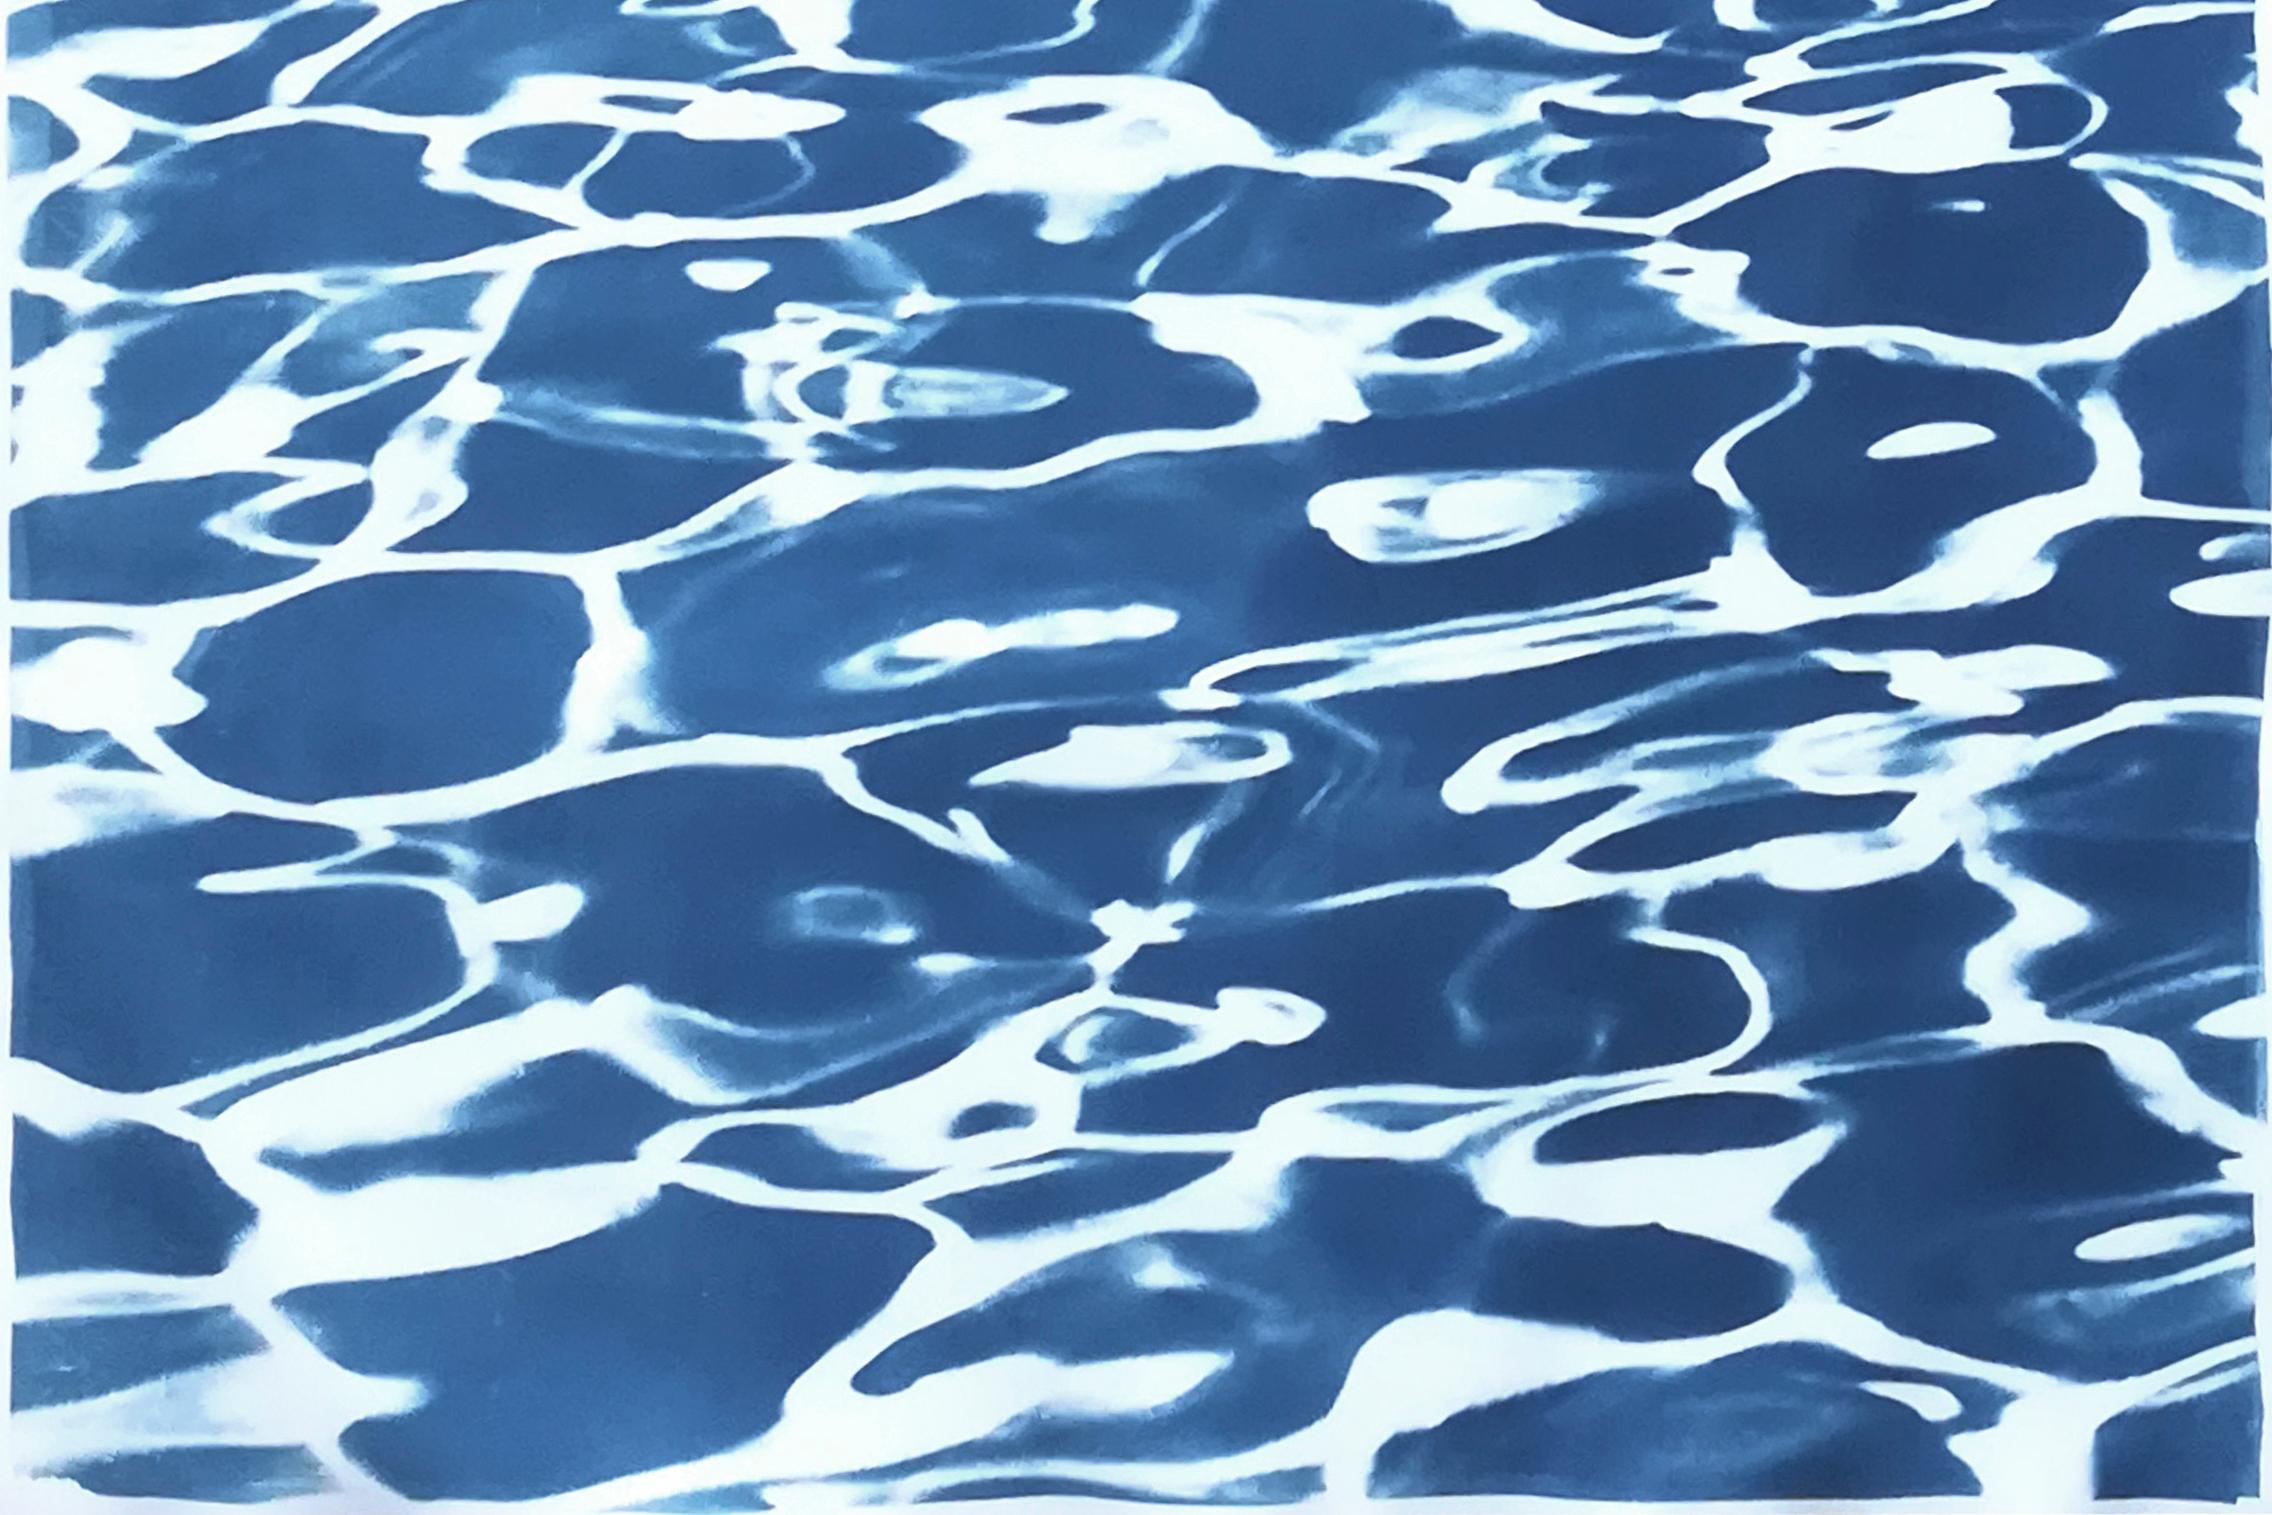 Triptych, Fresh California Pool Patterns, Handprinted Cyanotype, 100x210cm 6